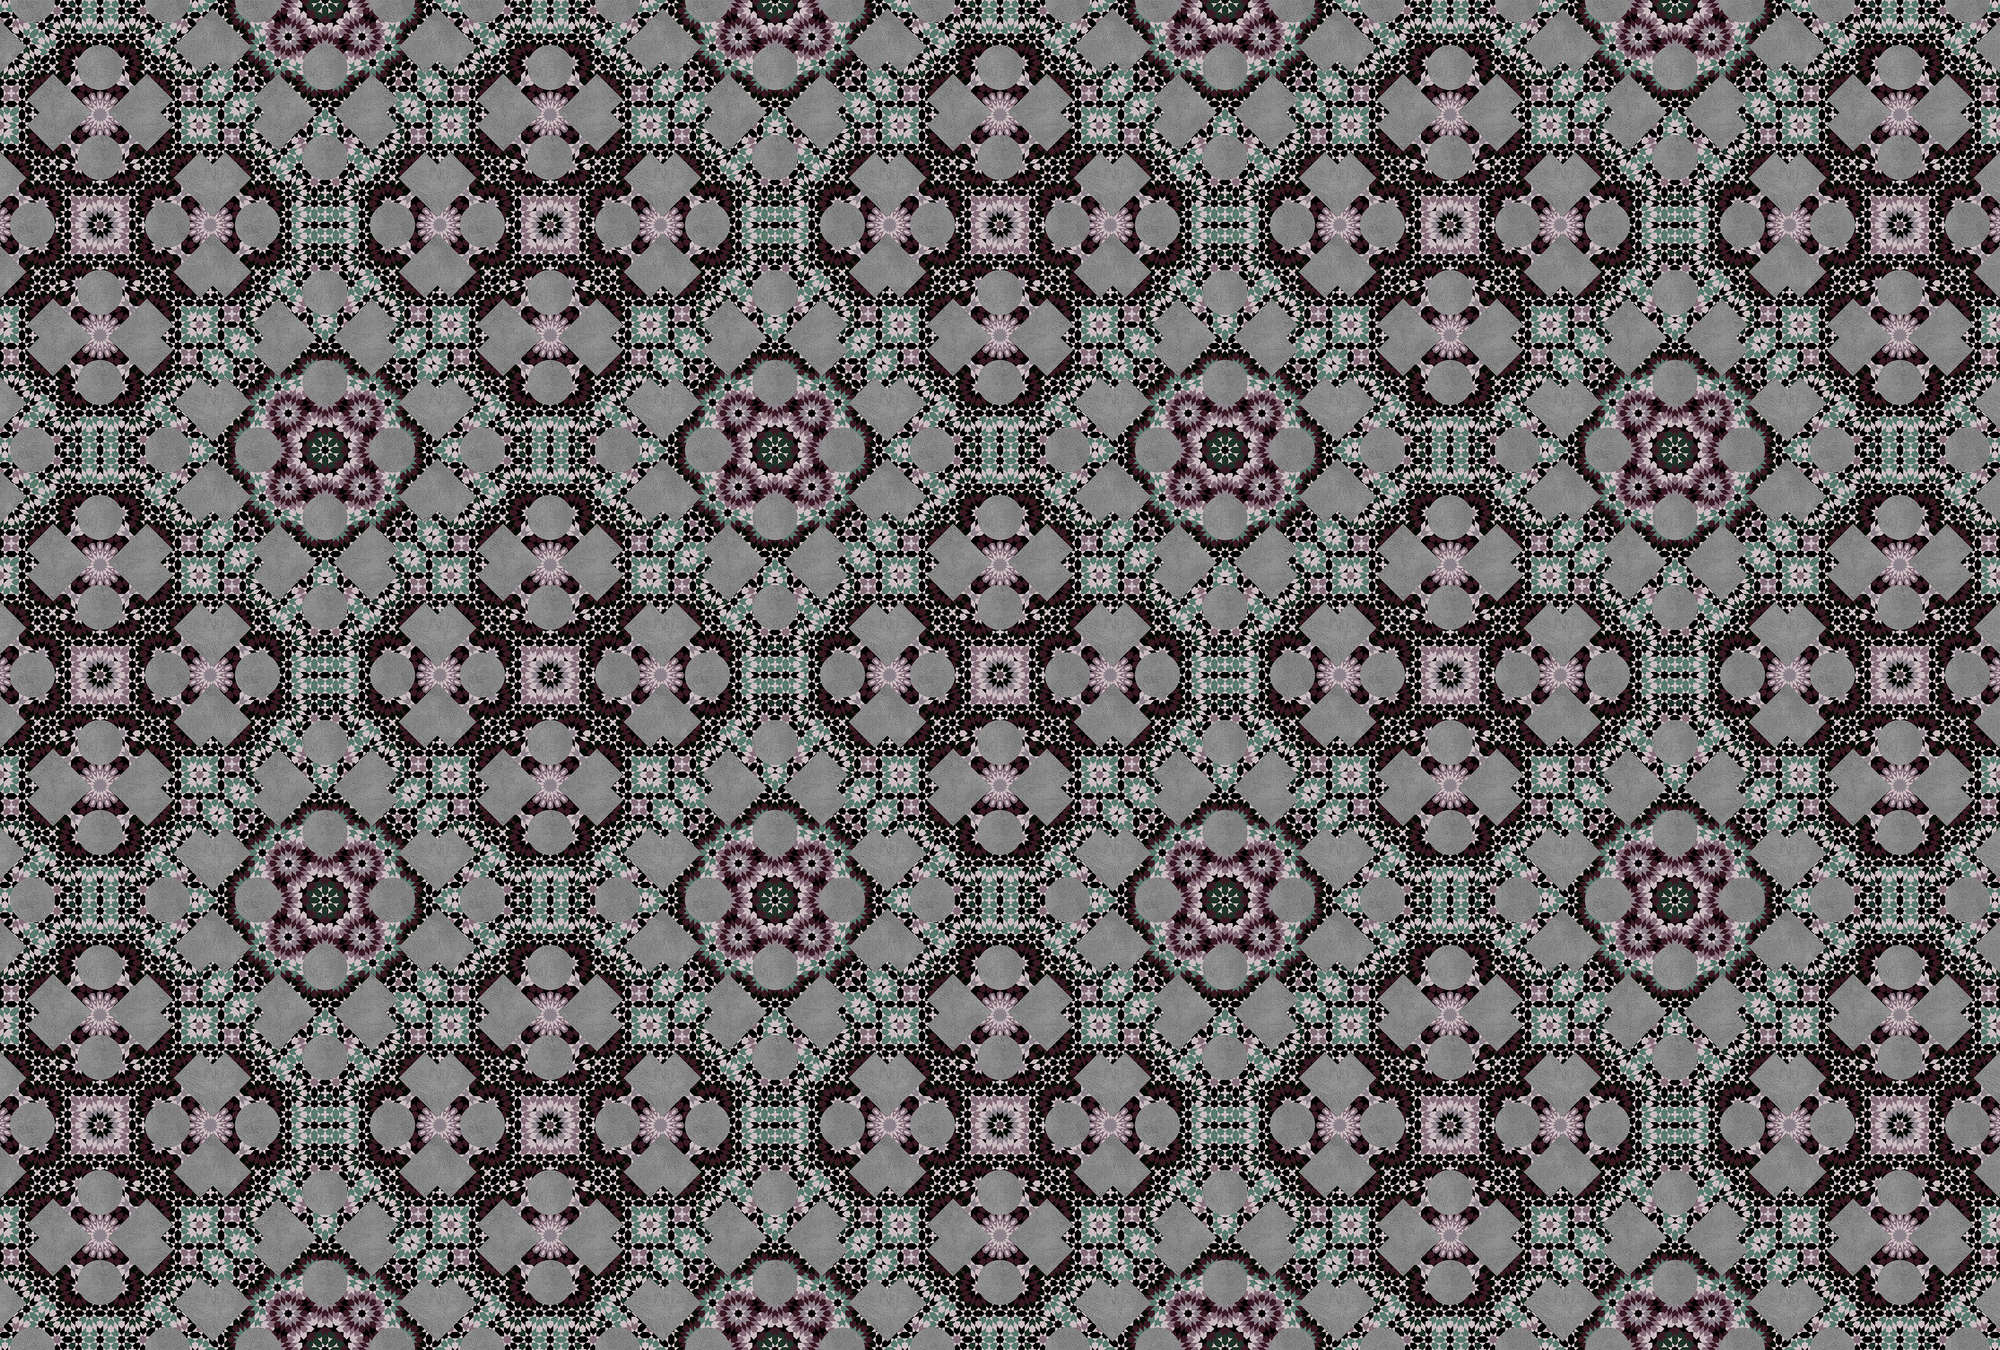             Graue Fototapete mit Kaleidoskop Muster – Grau, Schwarz
        